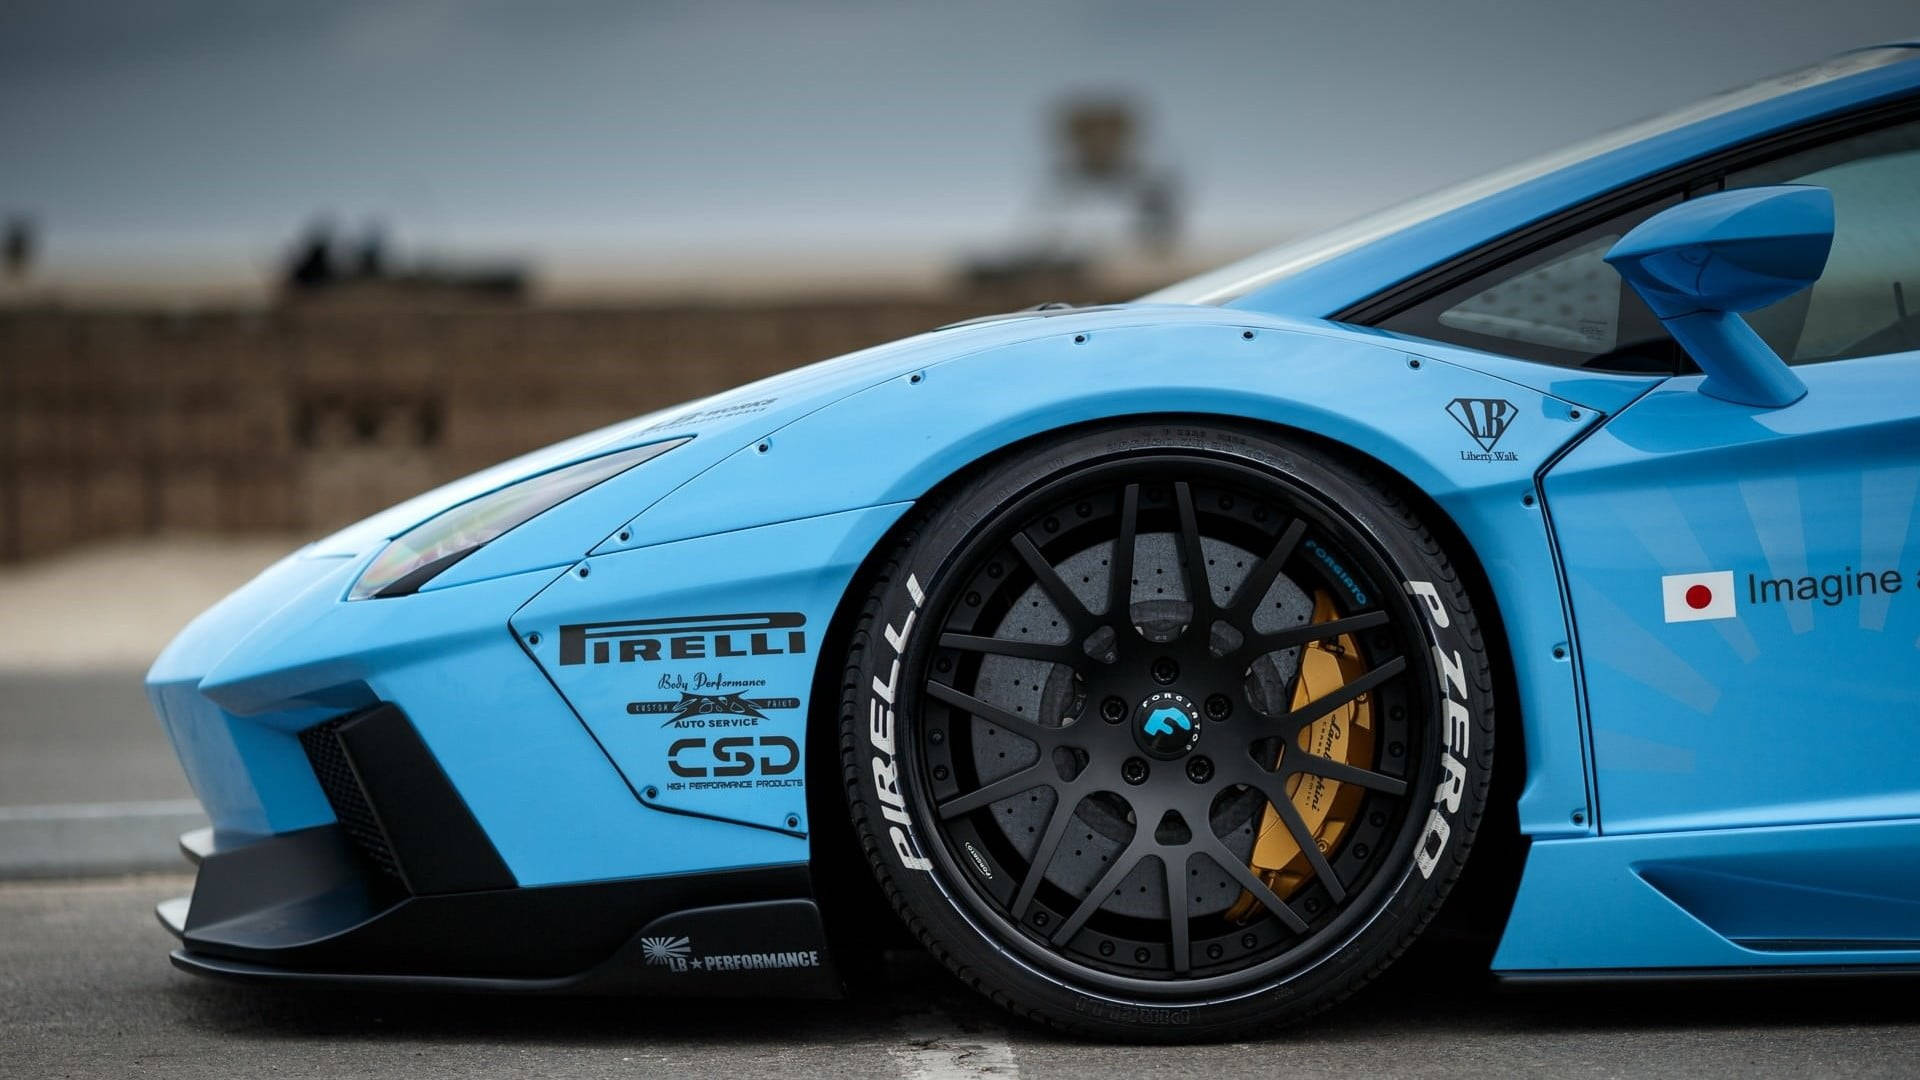 Blue Sports Car With Pirelli Tire Wallpaper